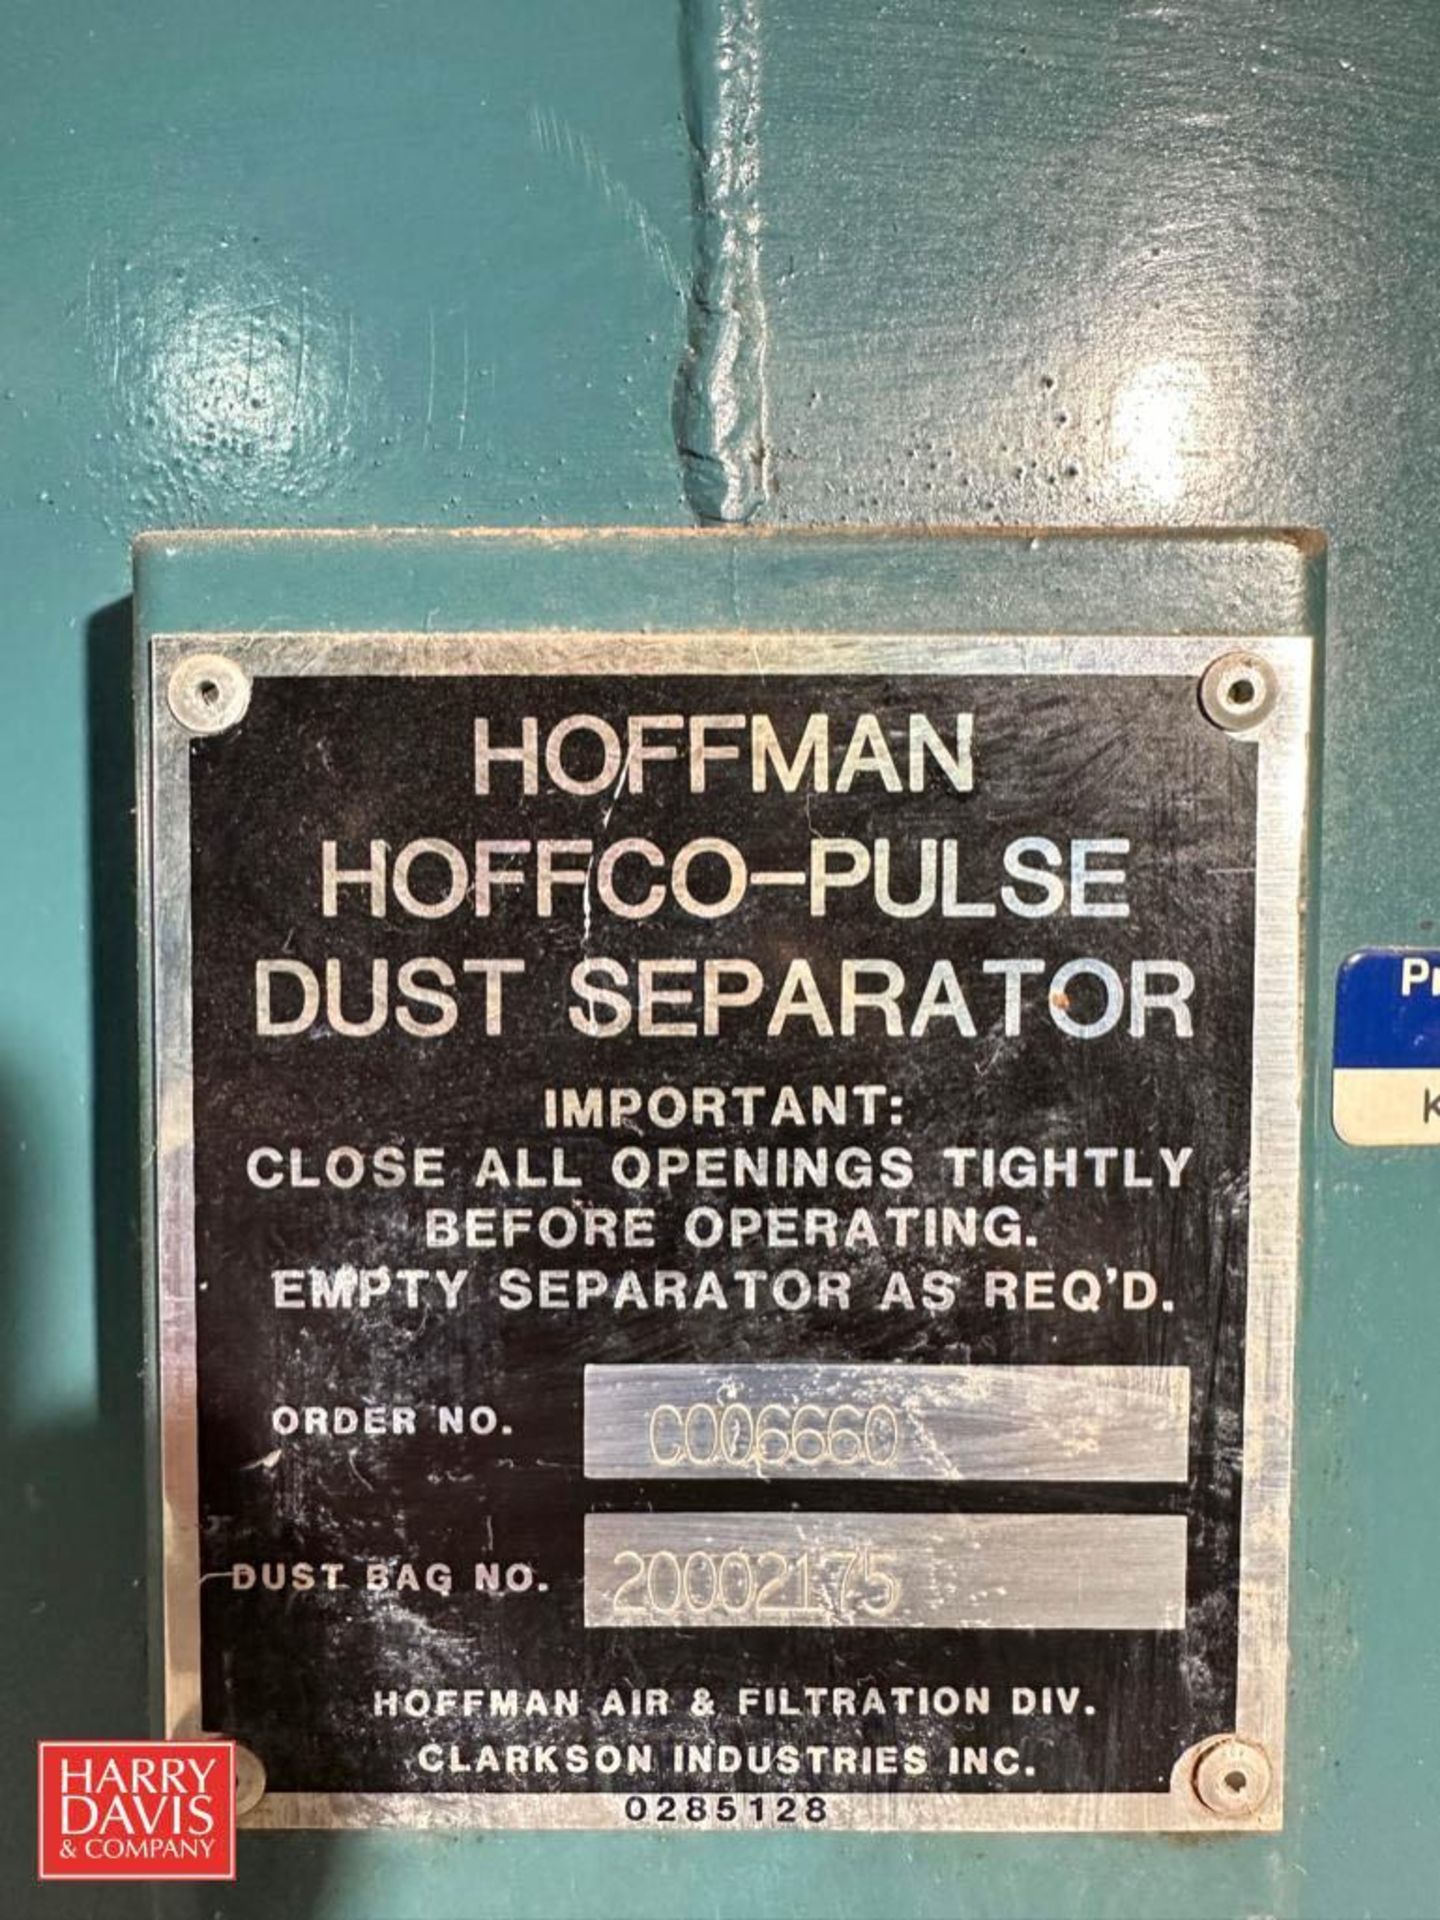 Hoffman Hoffco-Pulse Dust Separator, Model: C006660 (Subject to BULK BID: Lot 94) - Image 2 of 2